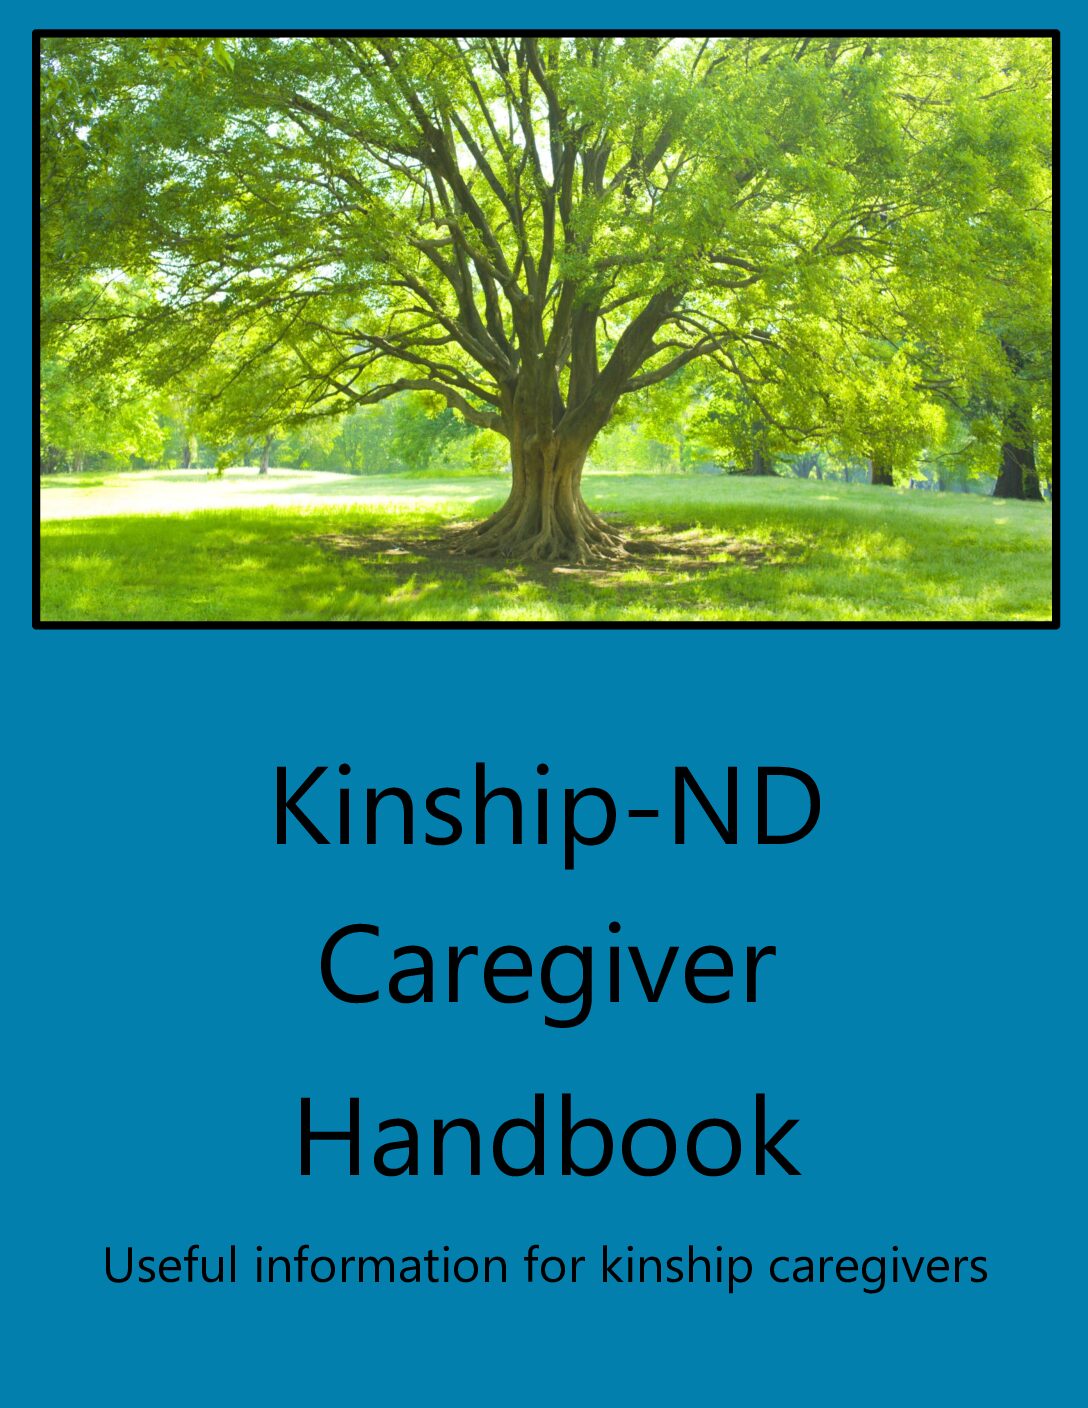 ND-Kinship-handbook-pdf